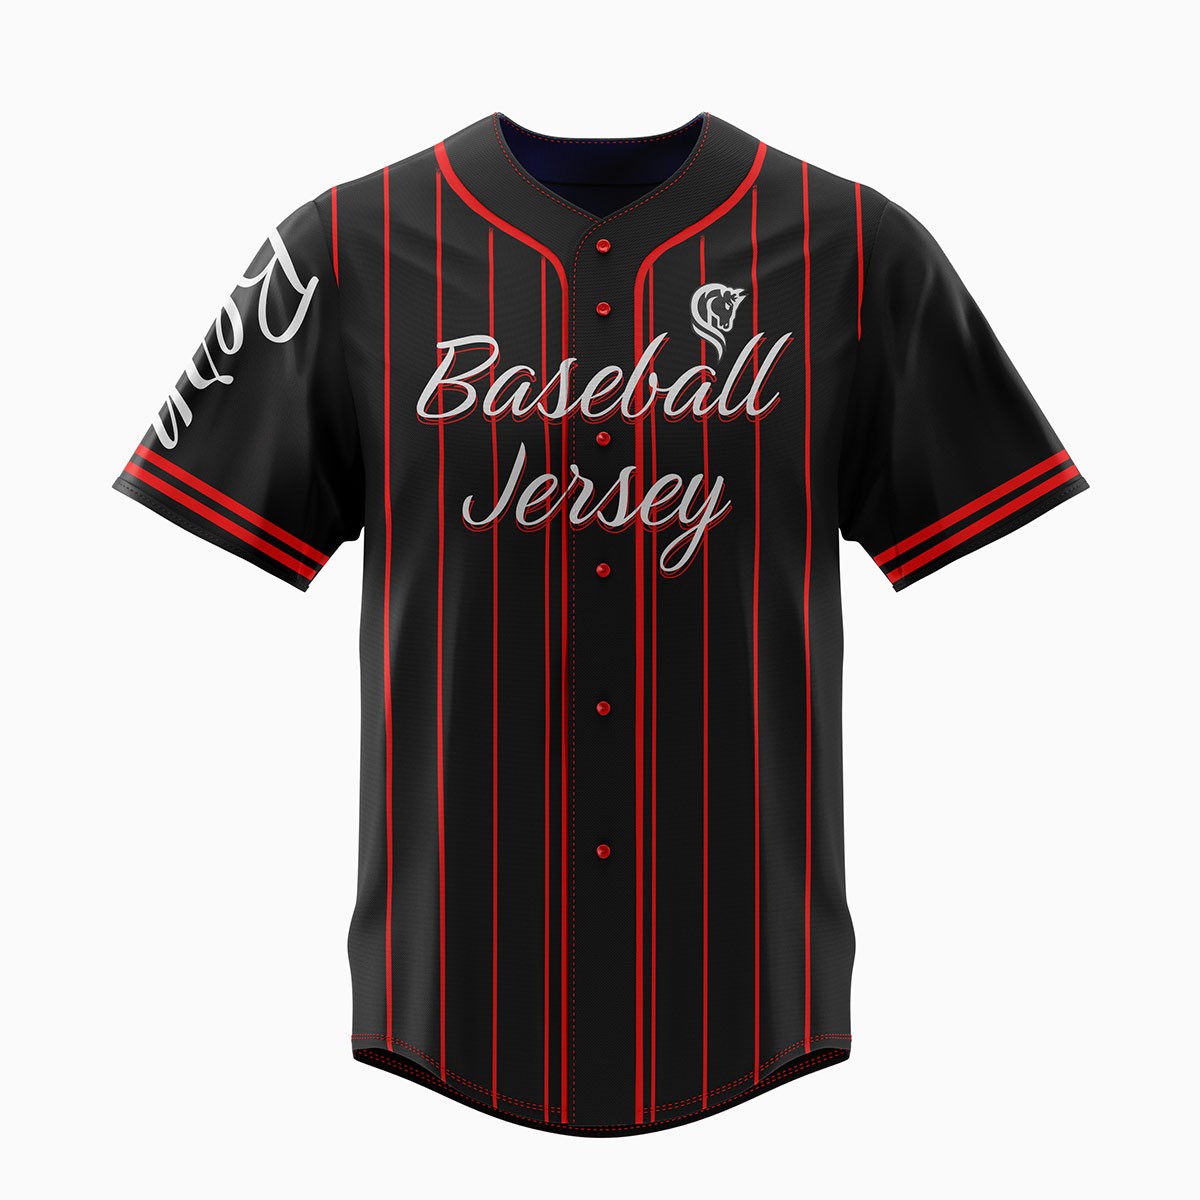 Baseball Jersey BBJ-2005-1